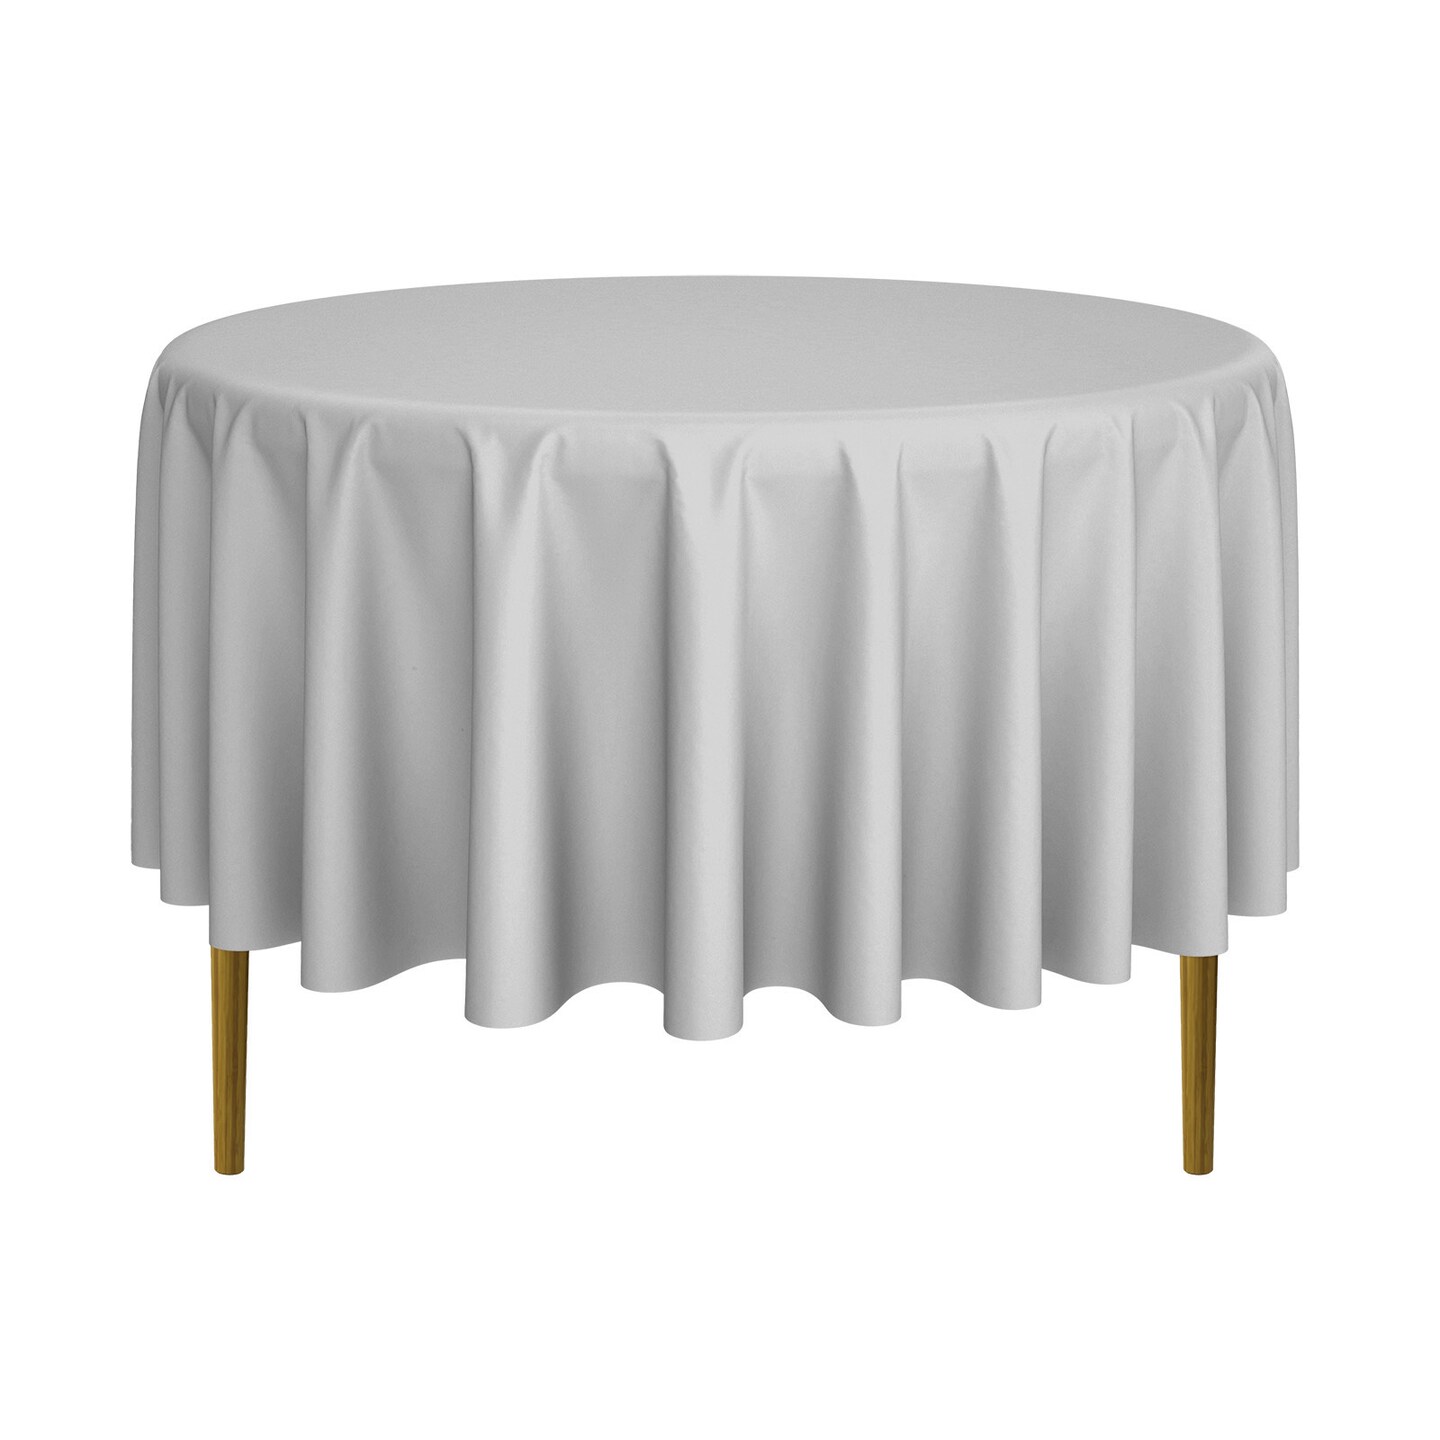 Lann&#x27;s Linens - 5 Premium Tablecloths for Wedding/Banquet/Restaurant - Polyester Fabric Table Cloths